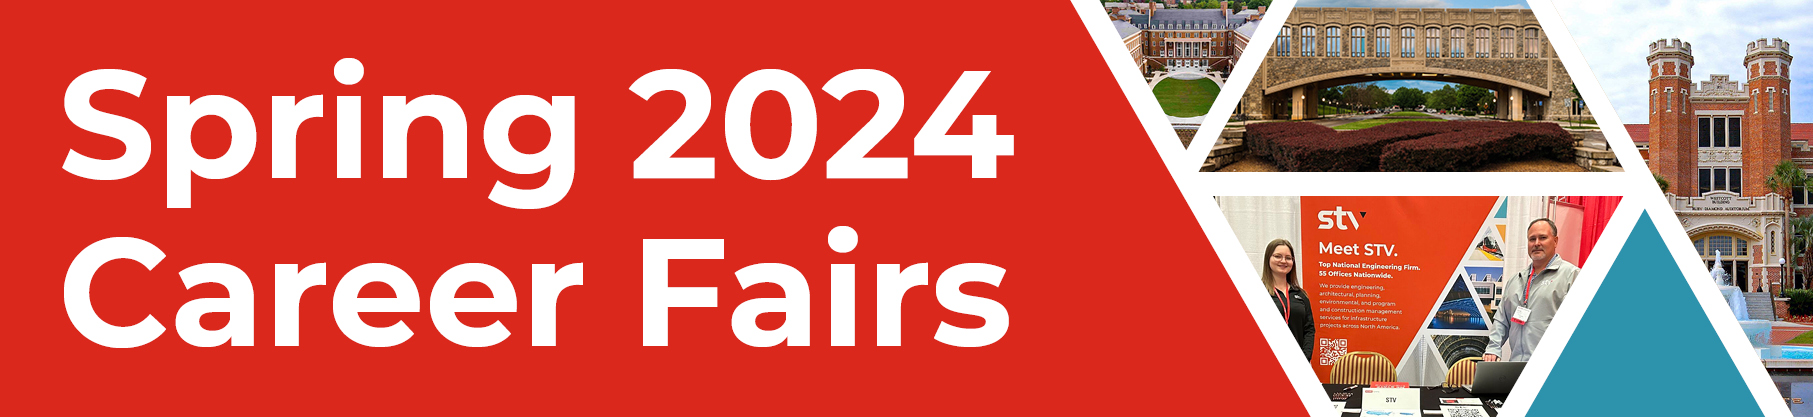 Spring 2024 Career Fairs